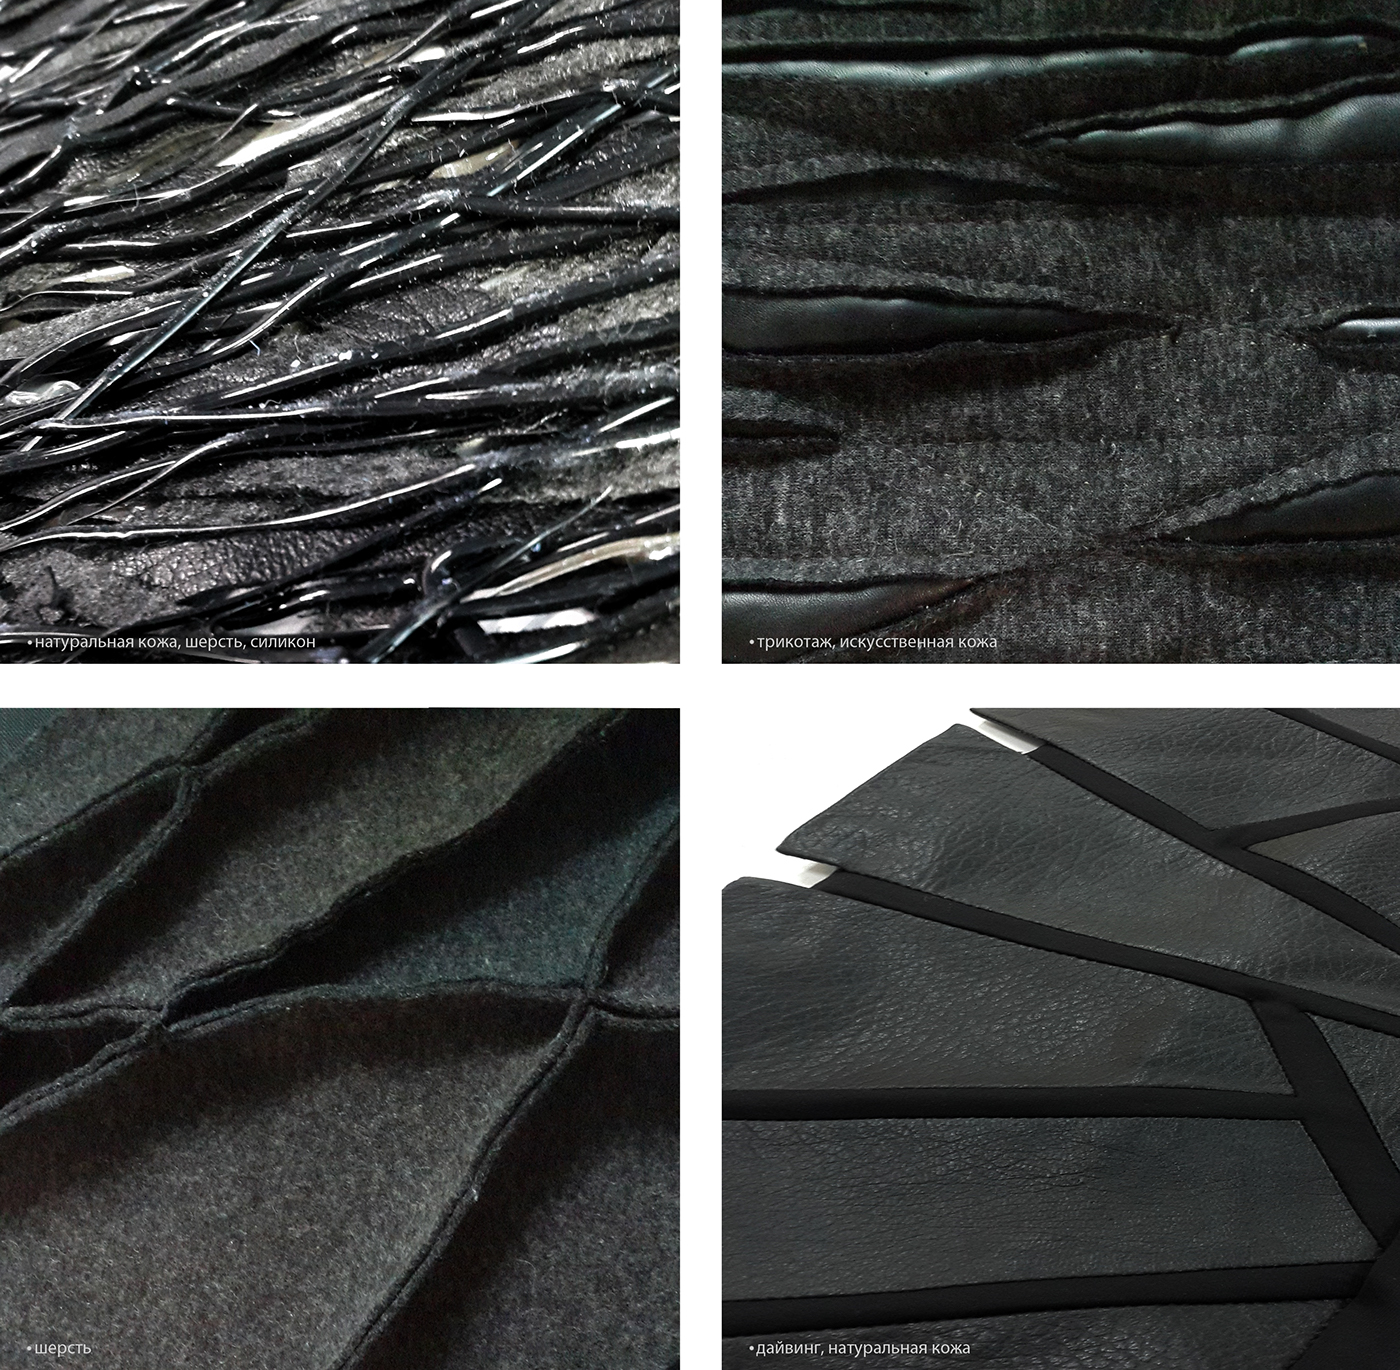 youth wear deconstruction avant-garde unconventional materials shape texture